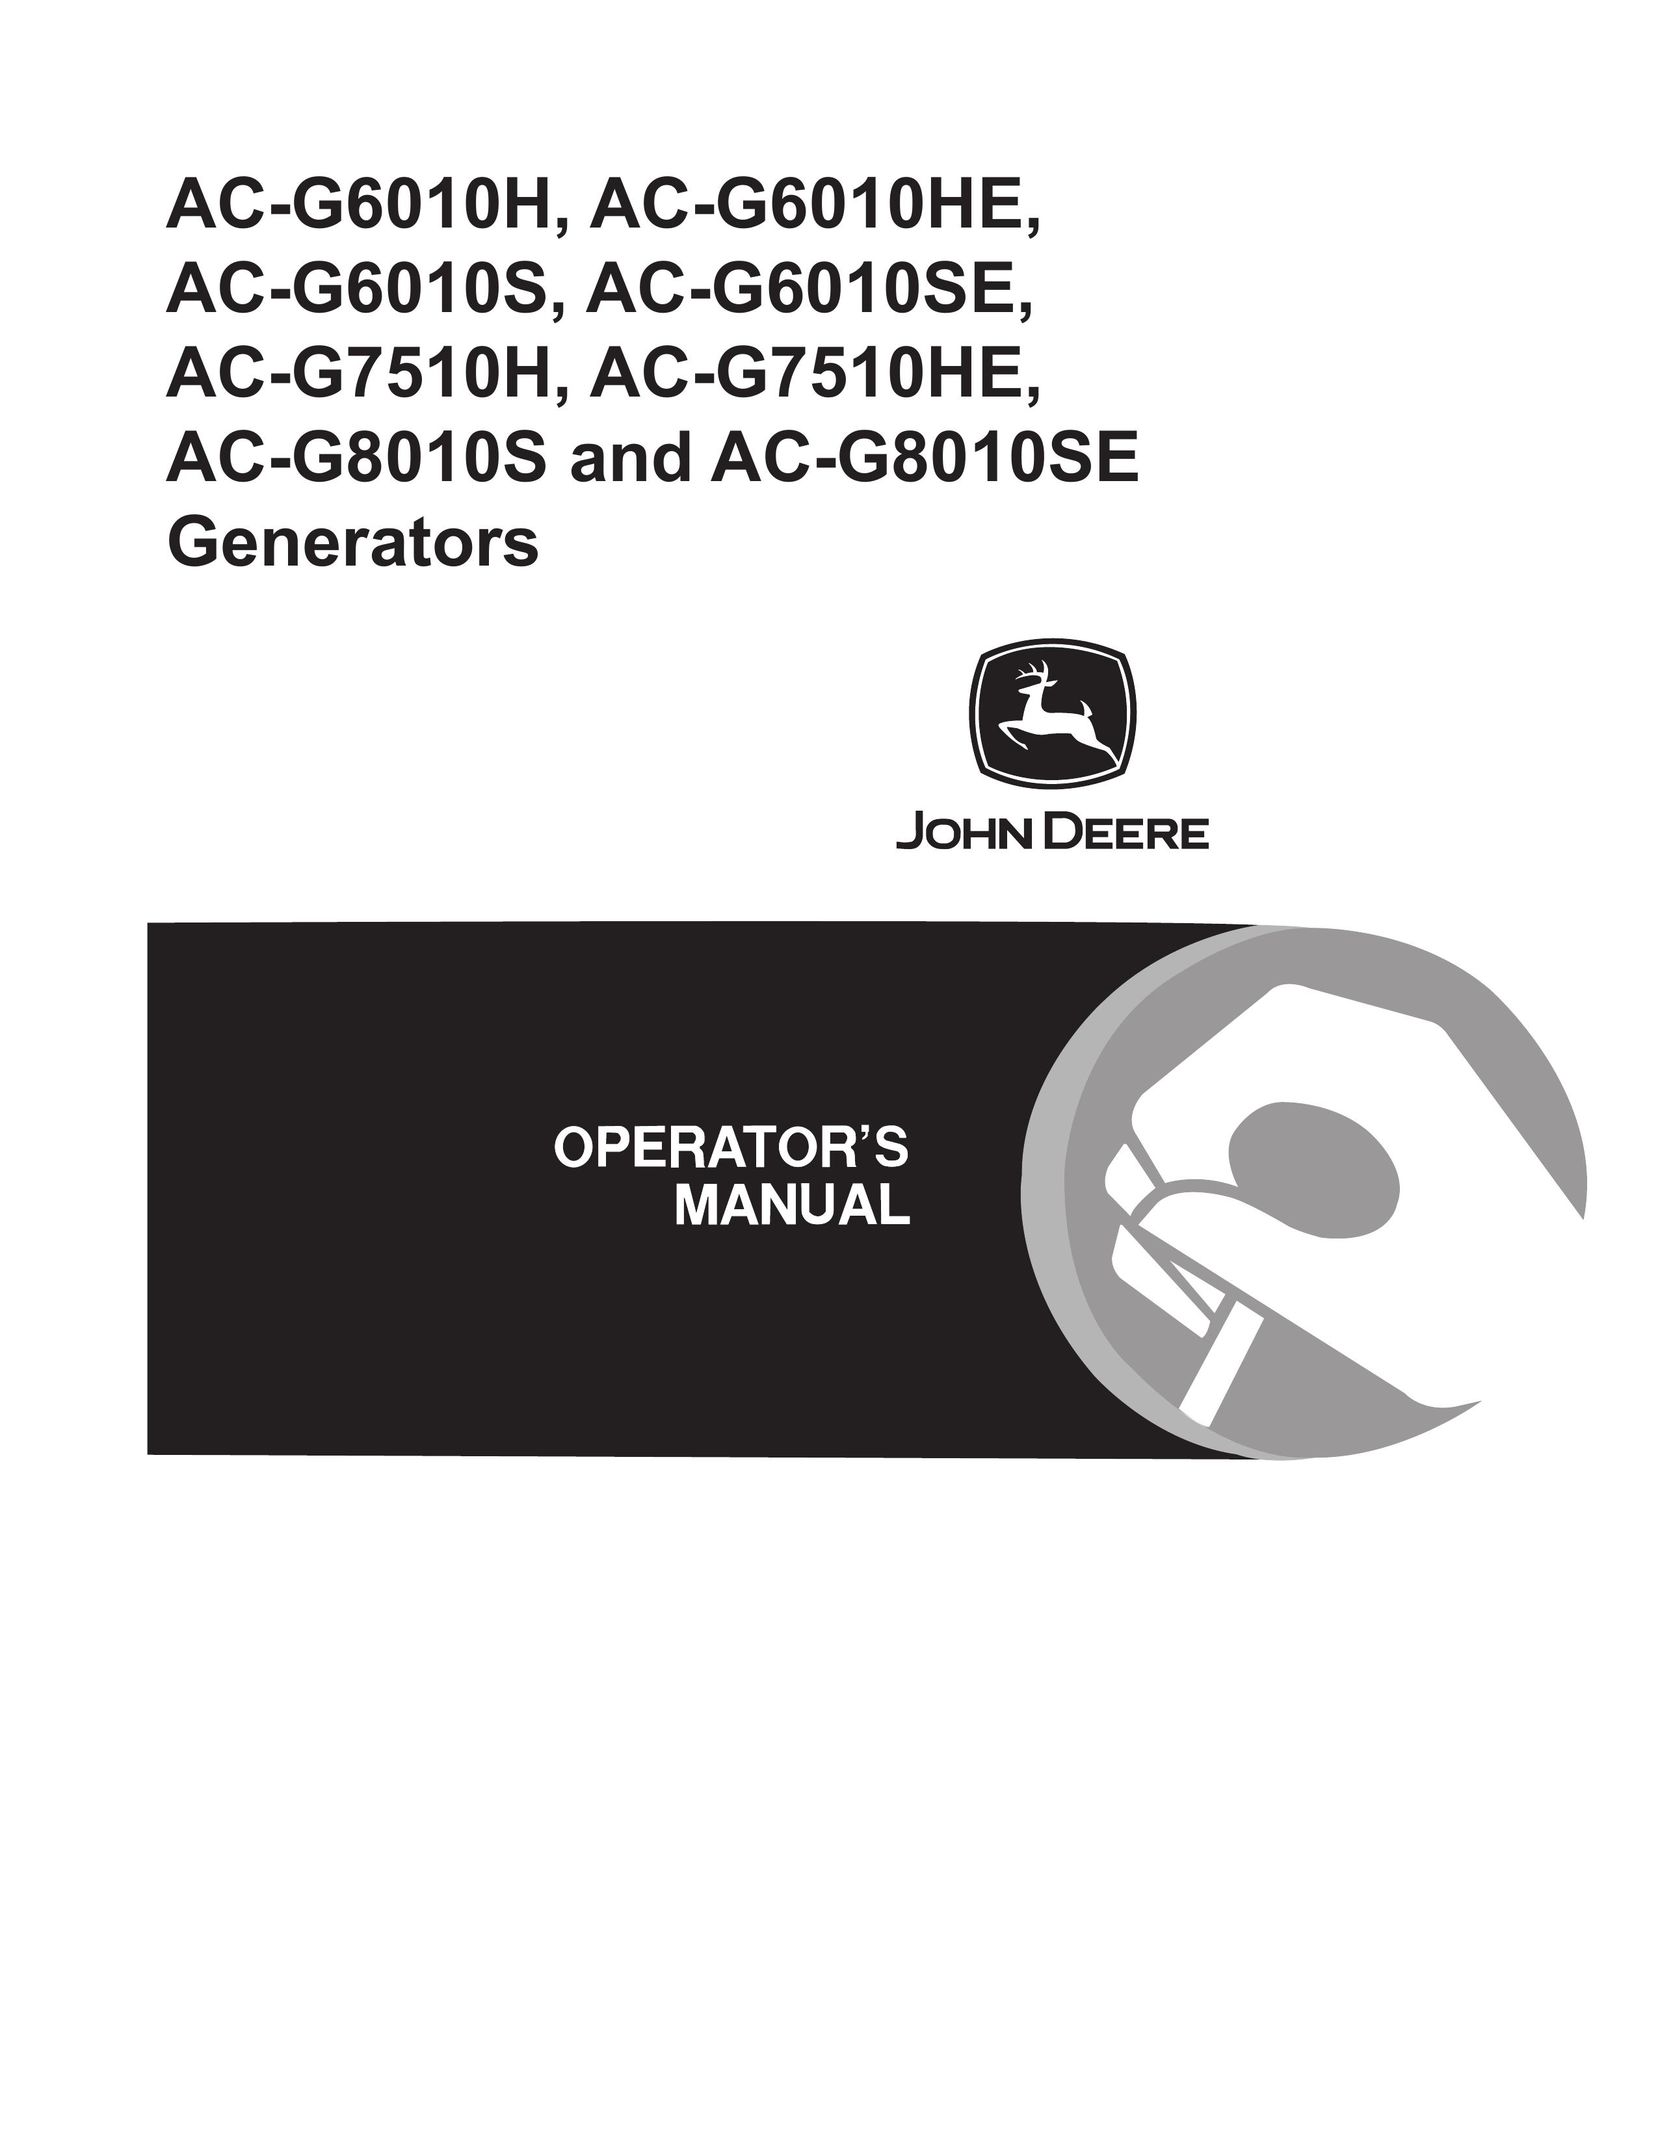 John Deere AC-G6010S Welding System User Manual